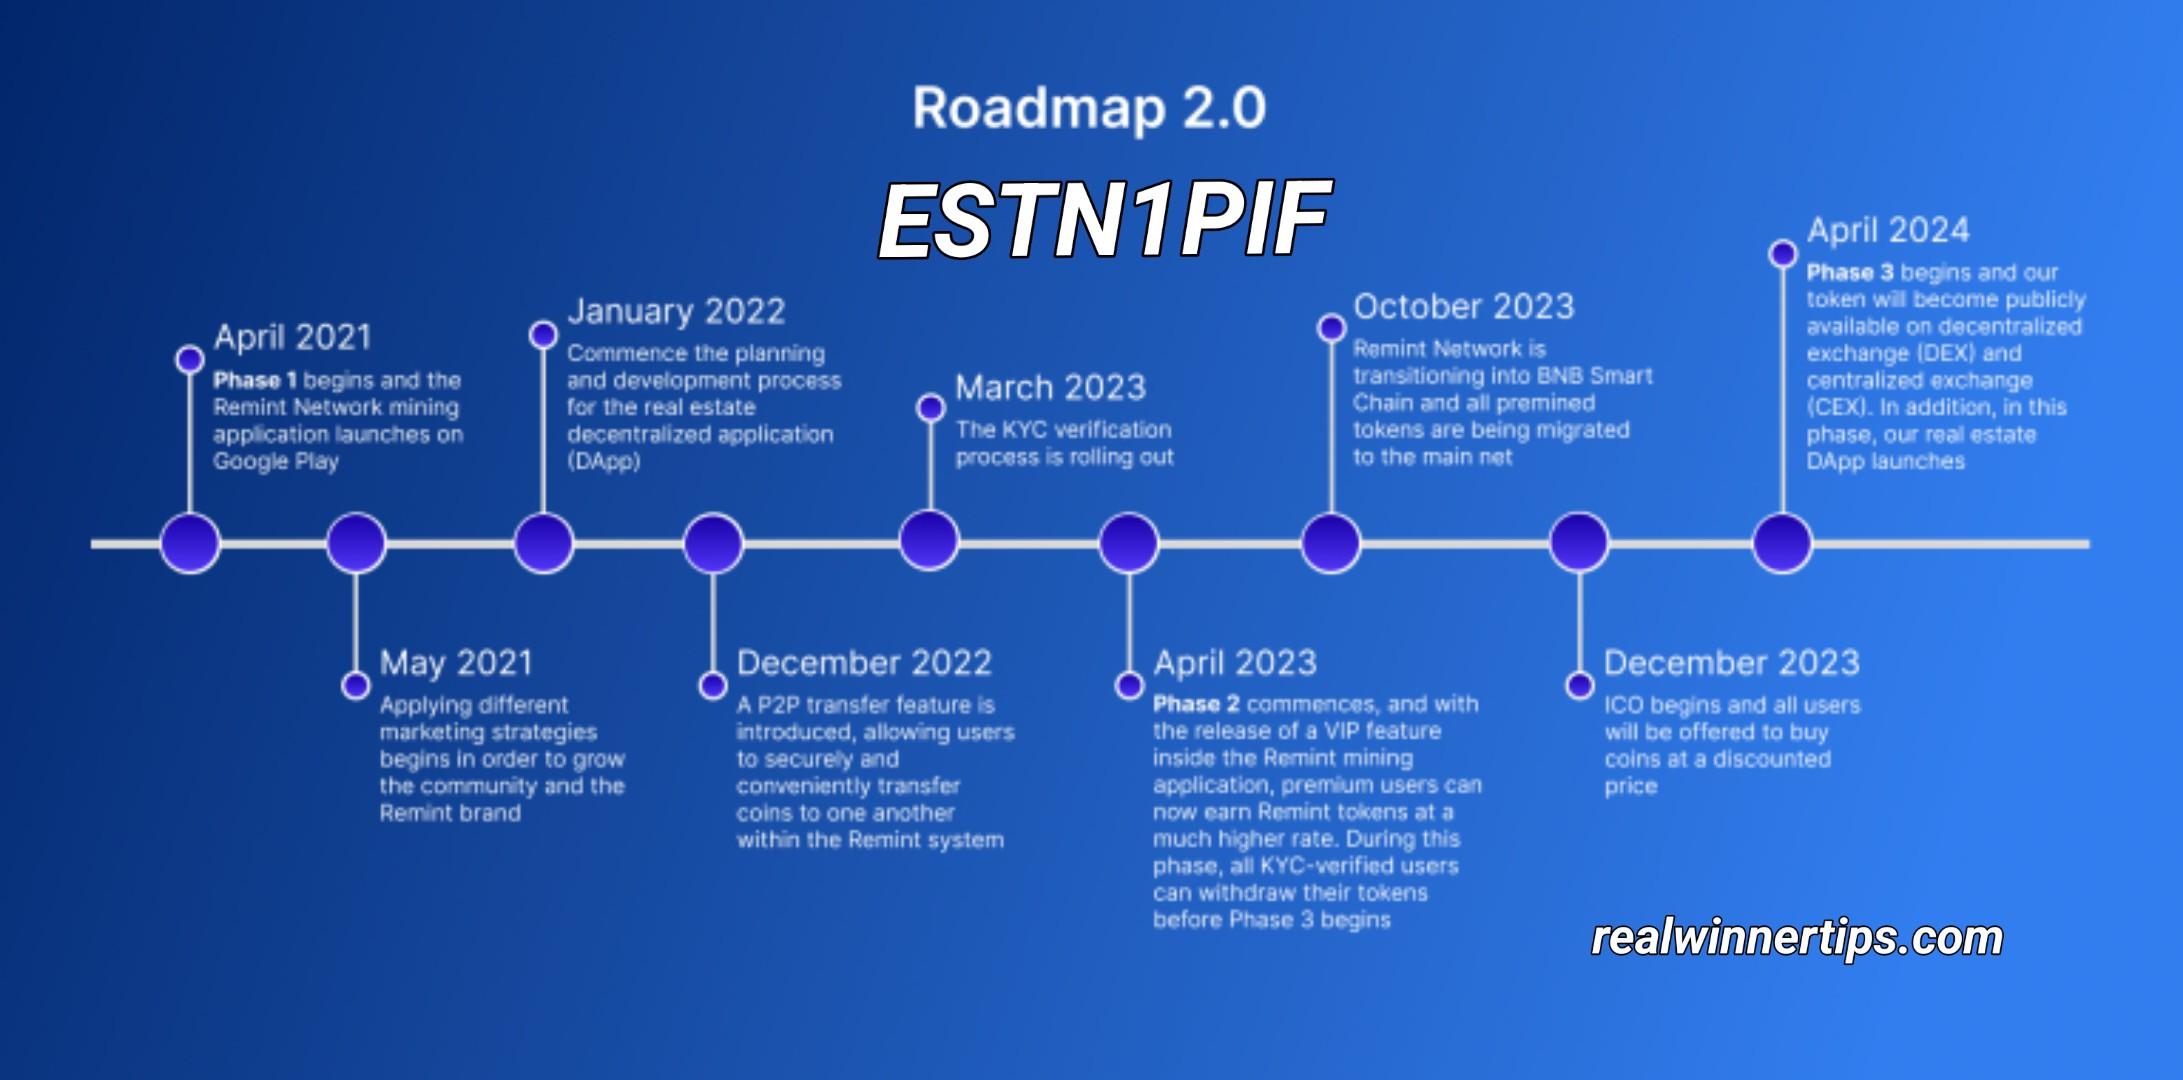 Remint roadmap